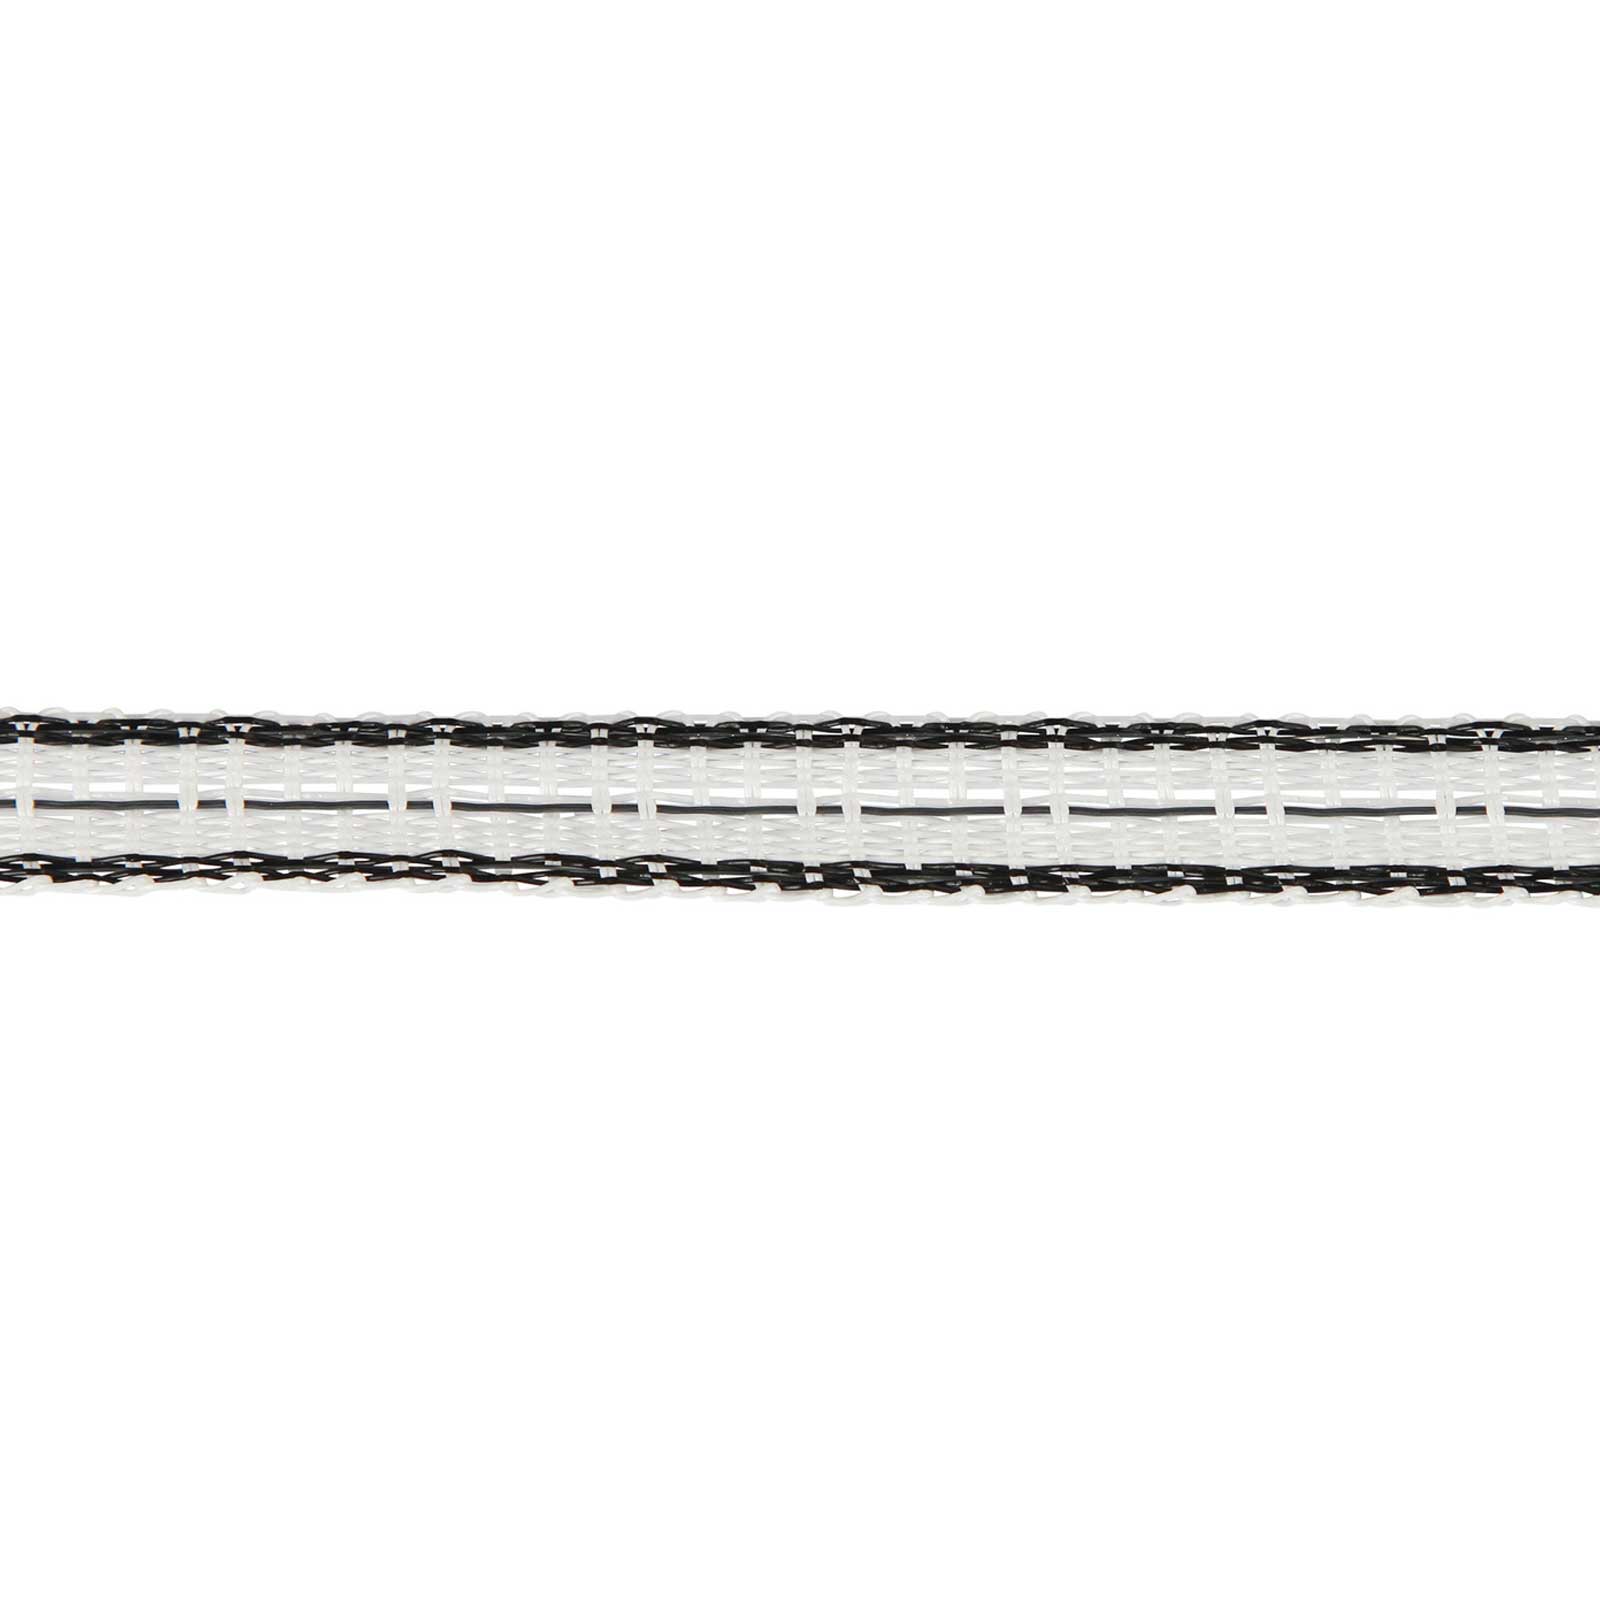 Ako Pasture Fence Tape TopLine 200m, 0.25 TriCOND, white-black